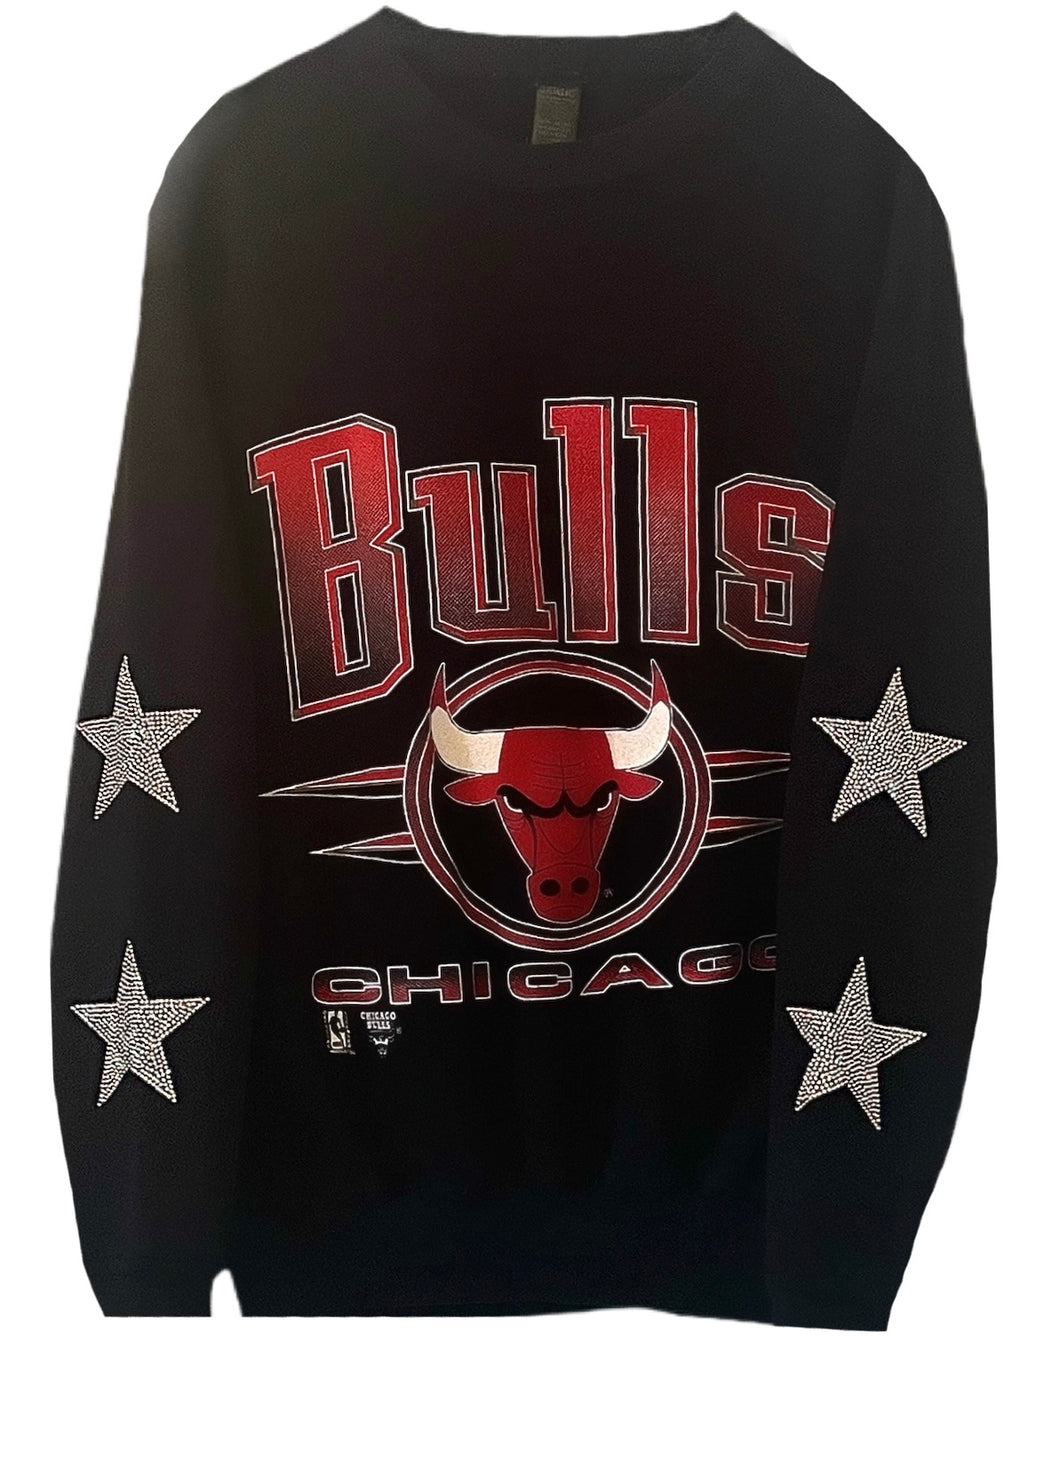 Chicago Bulls, NBA One of a KIND Vintage Sweatshirt with Crystal Star Design